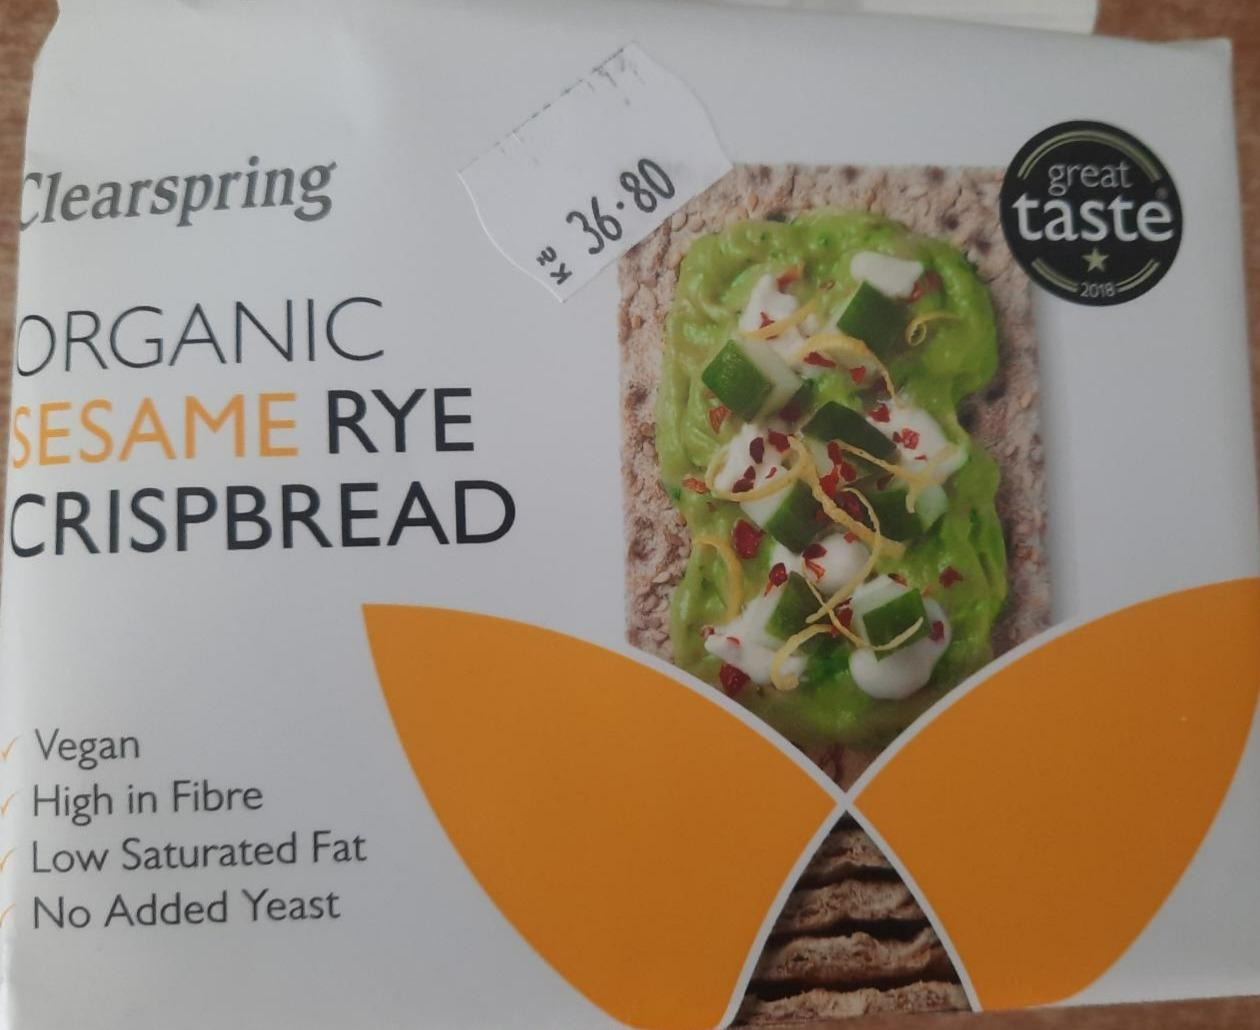 Fotografie - Clearspring organic sesame rye crispbread great taste